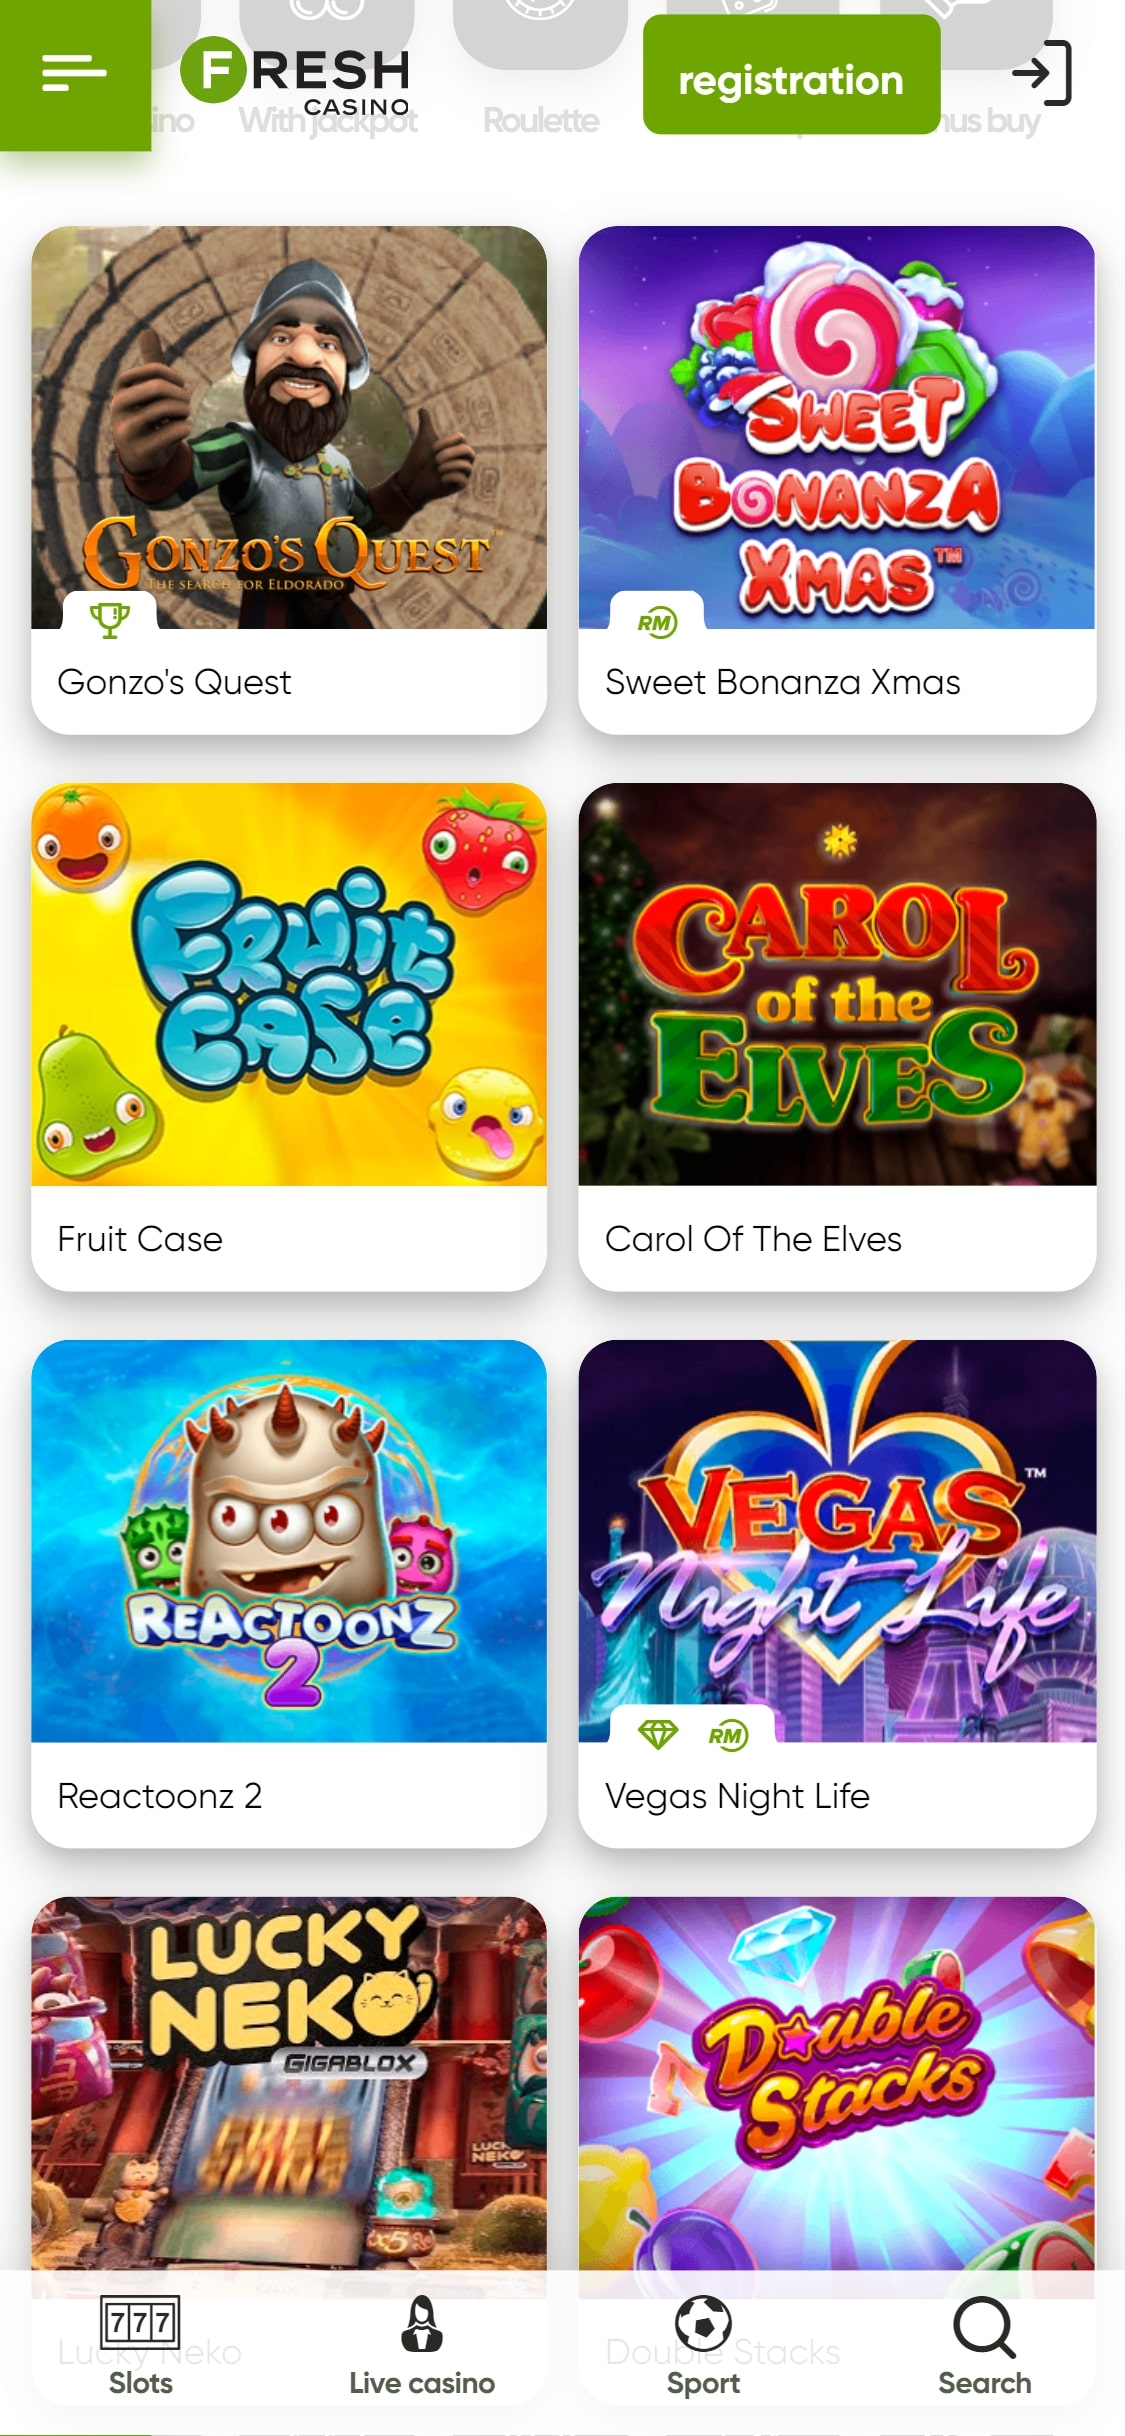 Fresh Casino Mobile Games Review